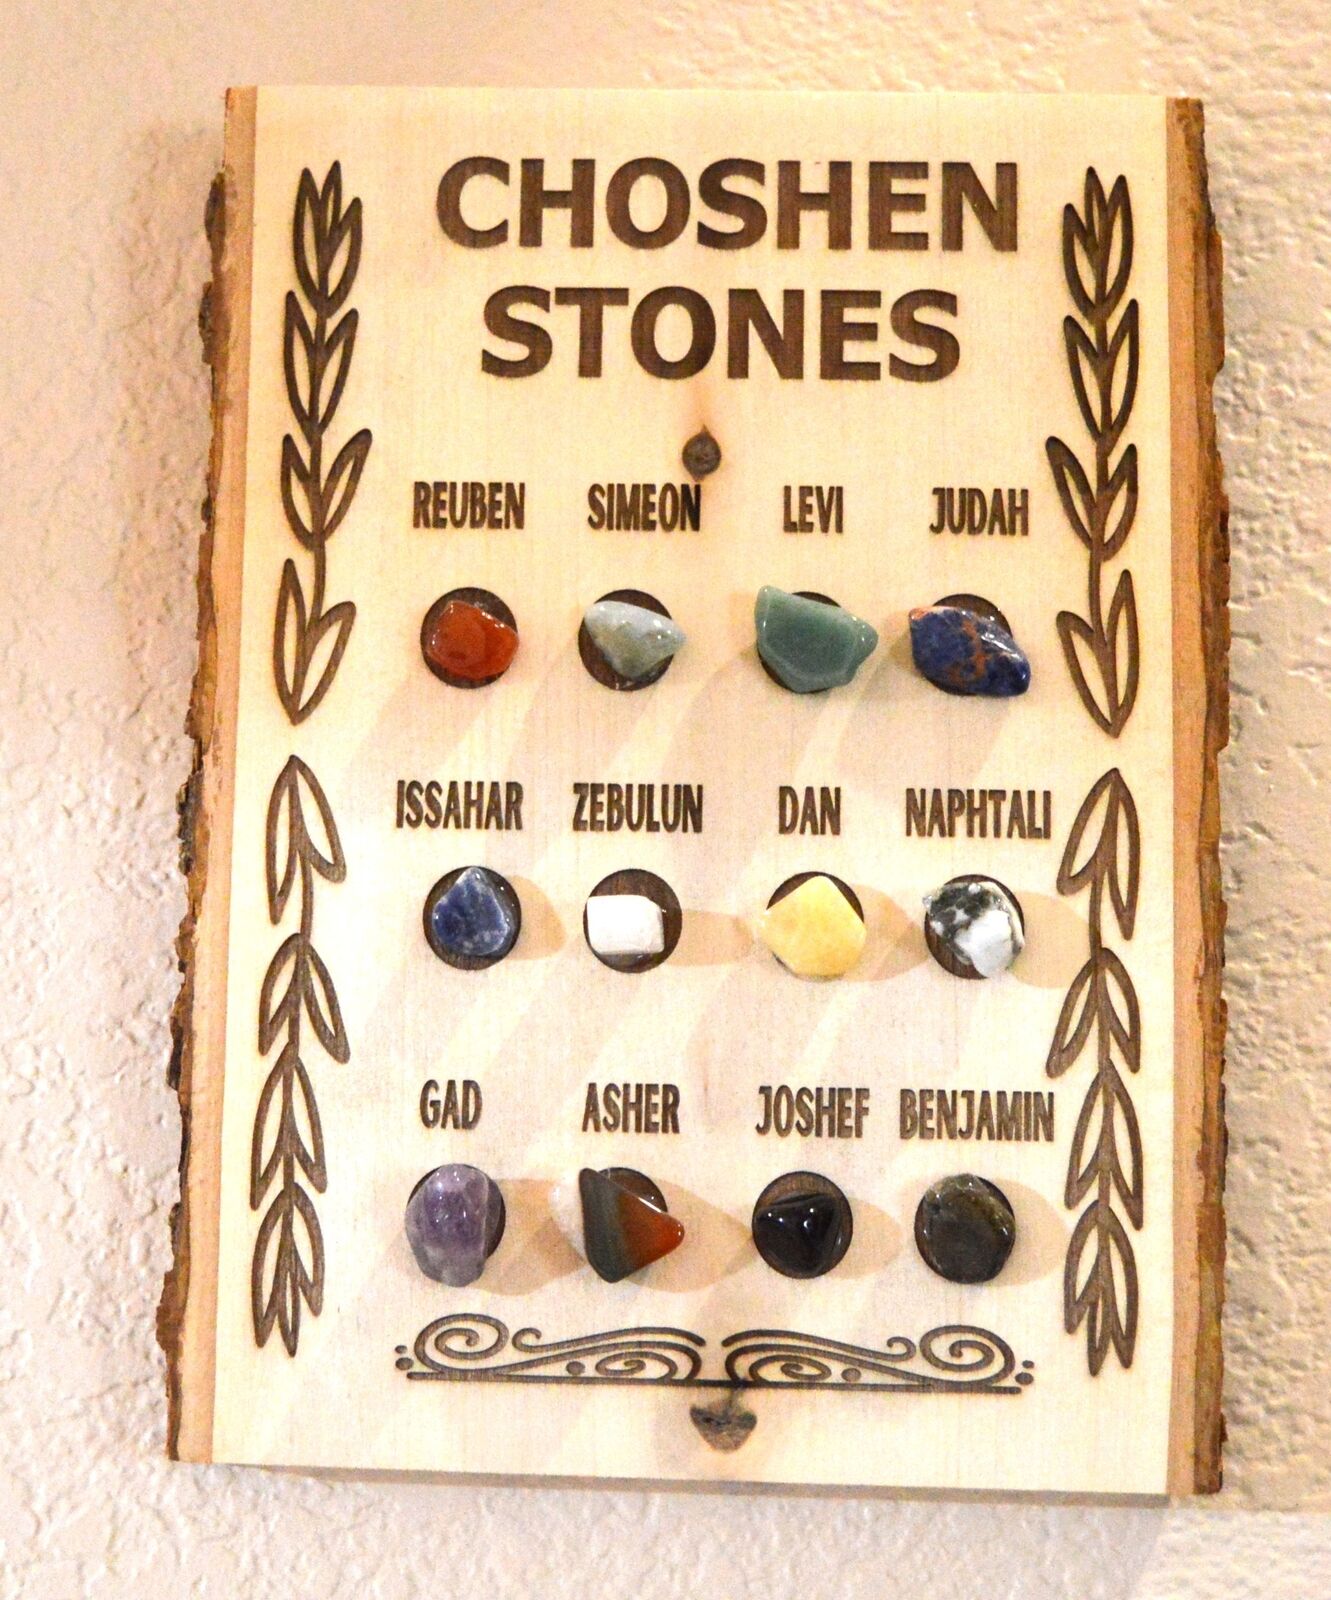 CHOSEN Stones 12 tribes of Israel Hoshen High Priest Ephod with the Genuine Gems